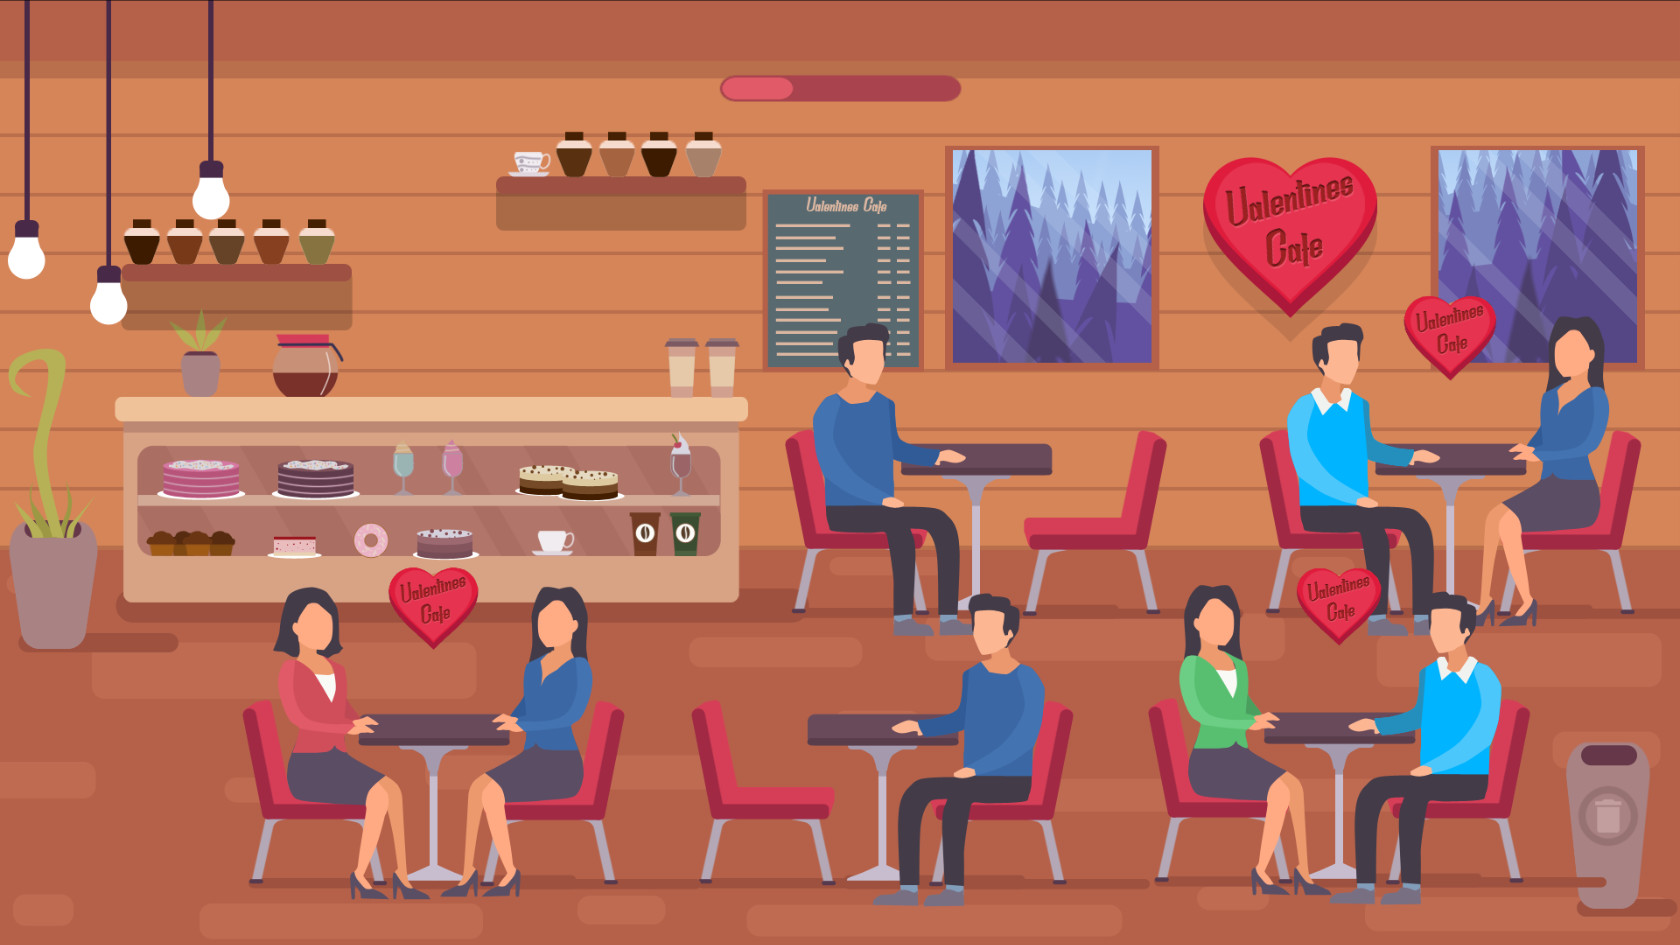 Valentines Cafe screenshot